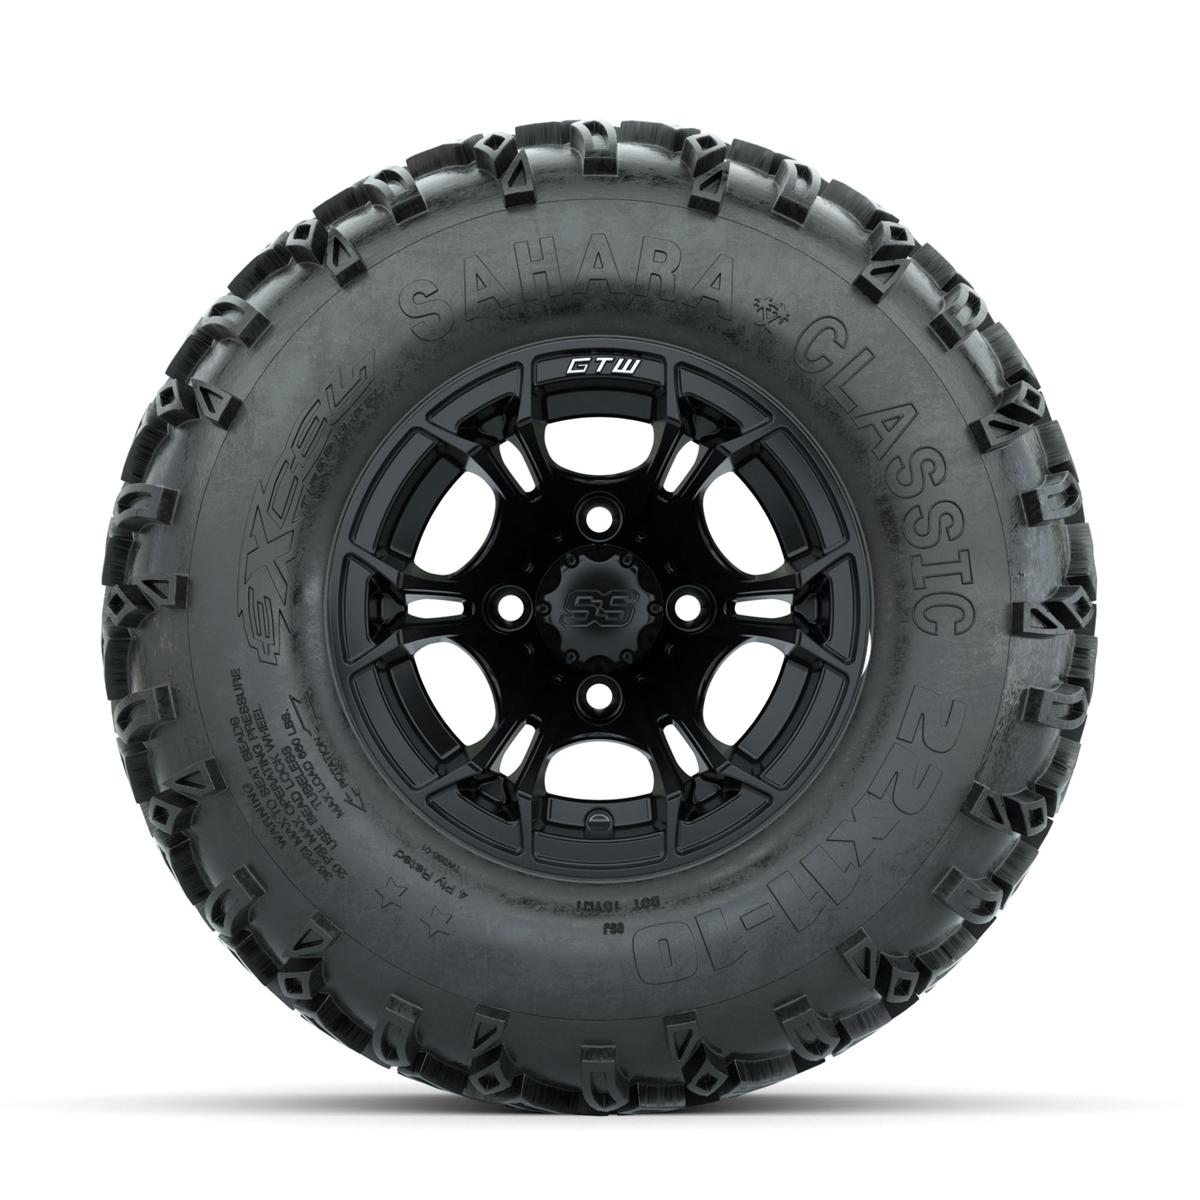 GTW Spyder Matte Black 10 in Wheels with 22x11-10 Sahara Classic All Terrain Tires – Full Set